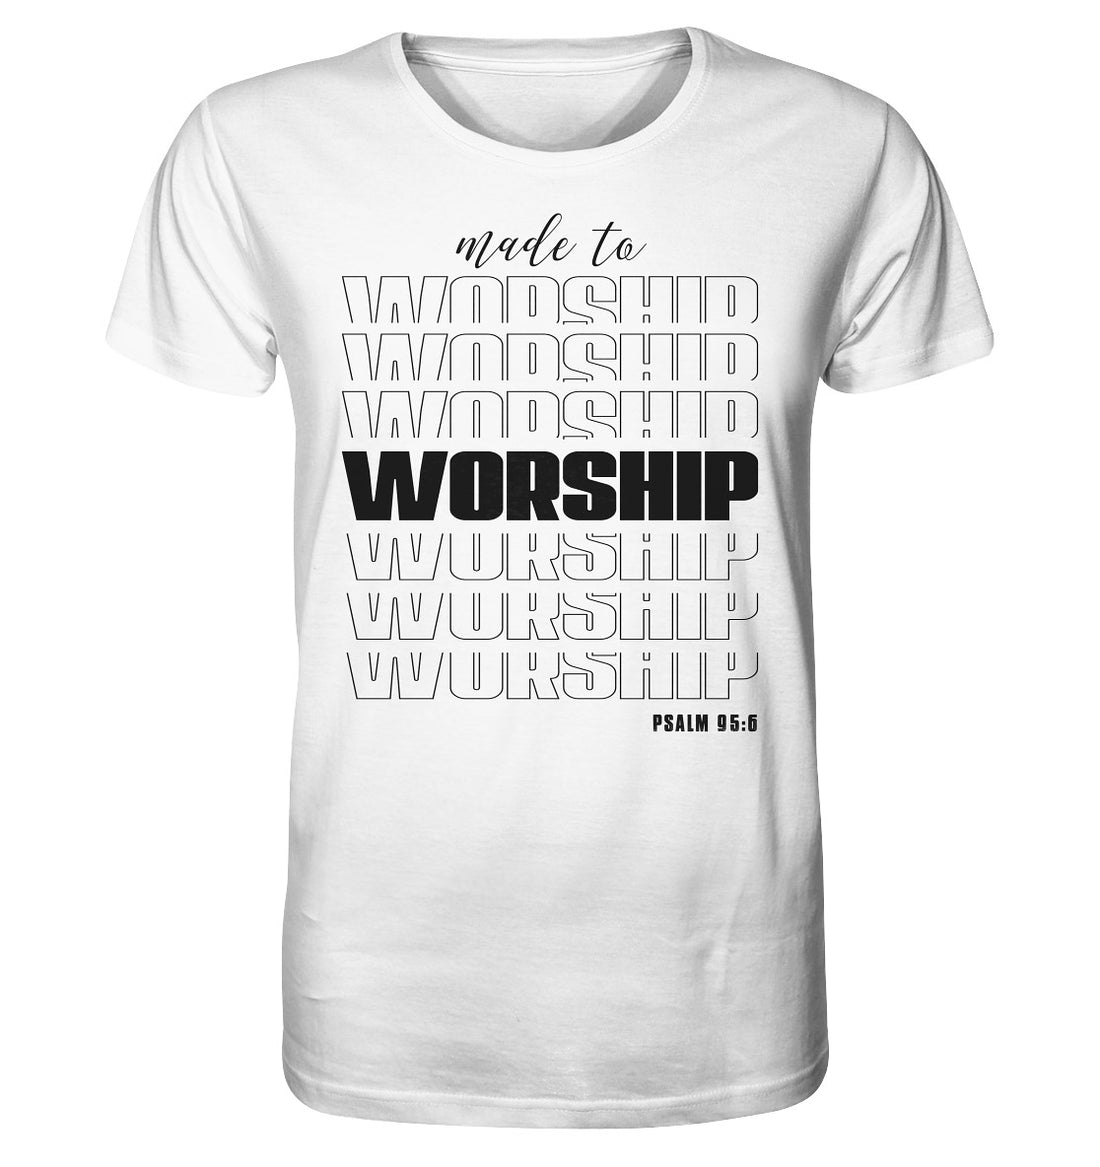 Ps 95,6 - made to WORSHIP - Organic Shirt